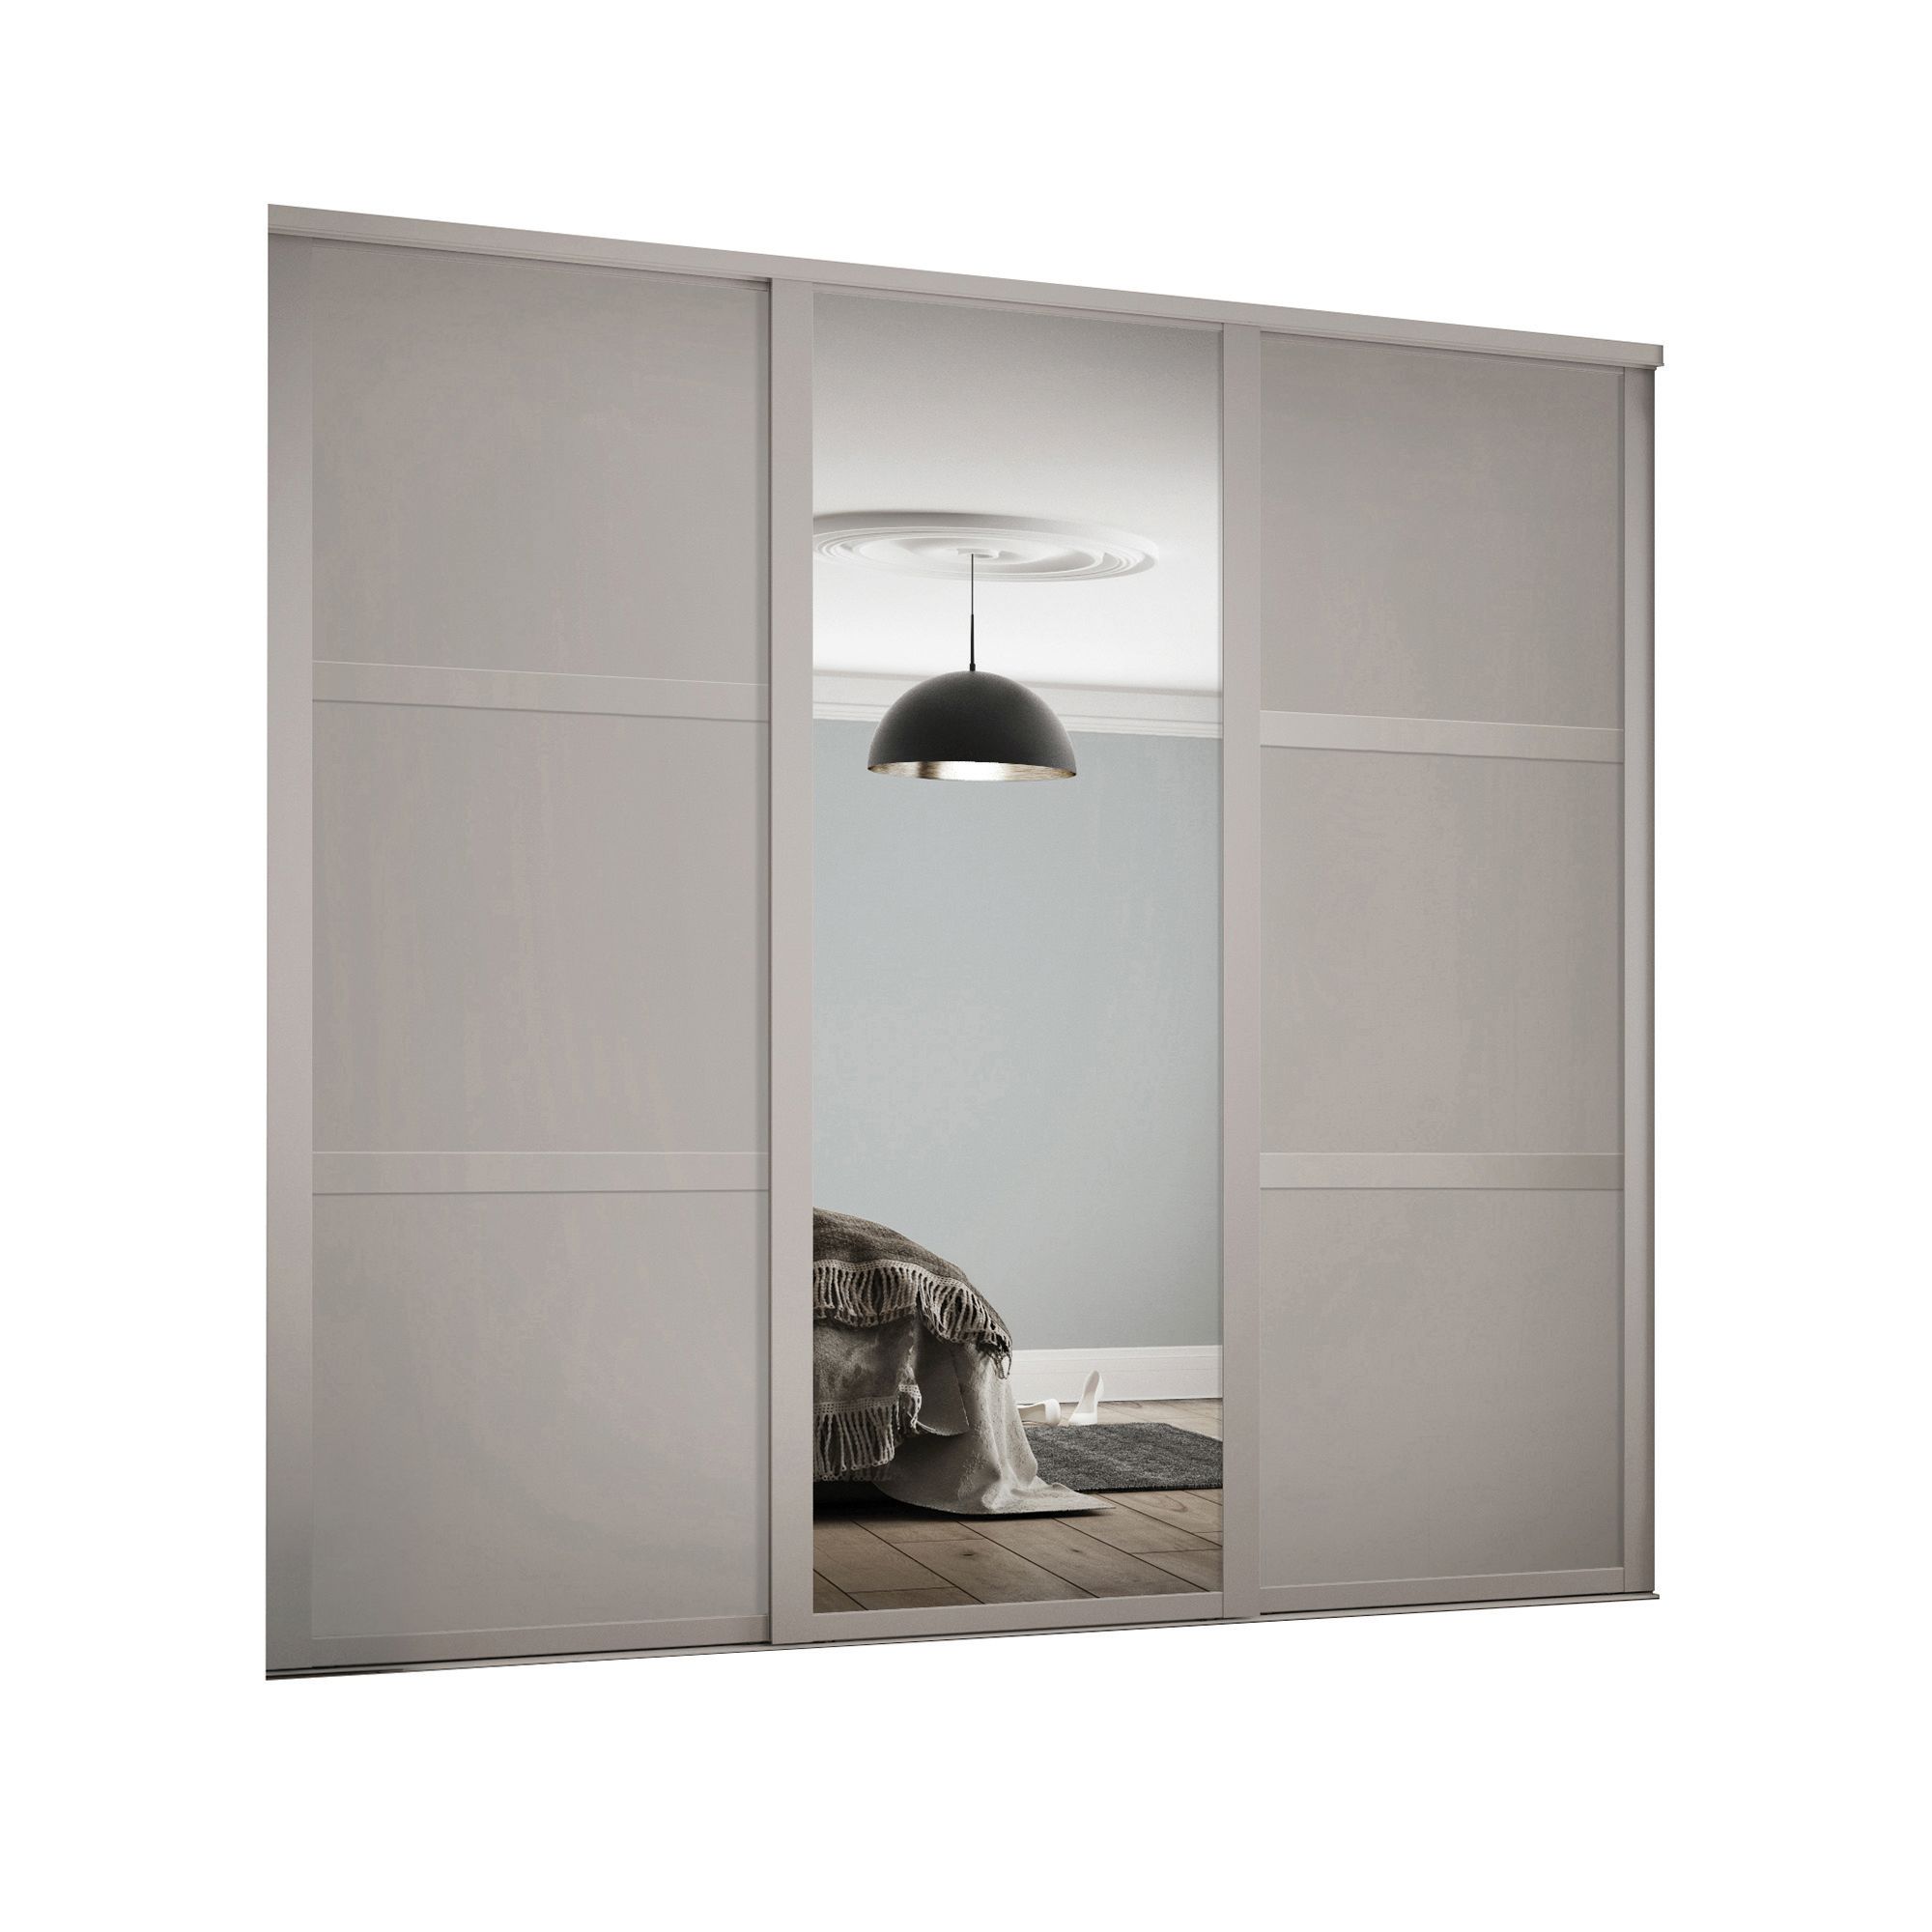 Image of Spacepro 762mm Cashmere Shaker frame 3 panel & 1x Single panel Mirror Sliding Wardrobe Door Kit